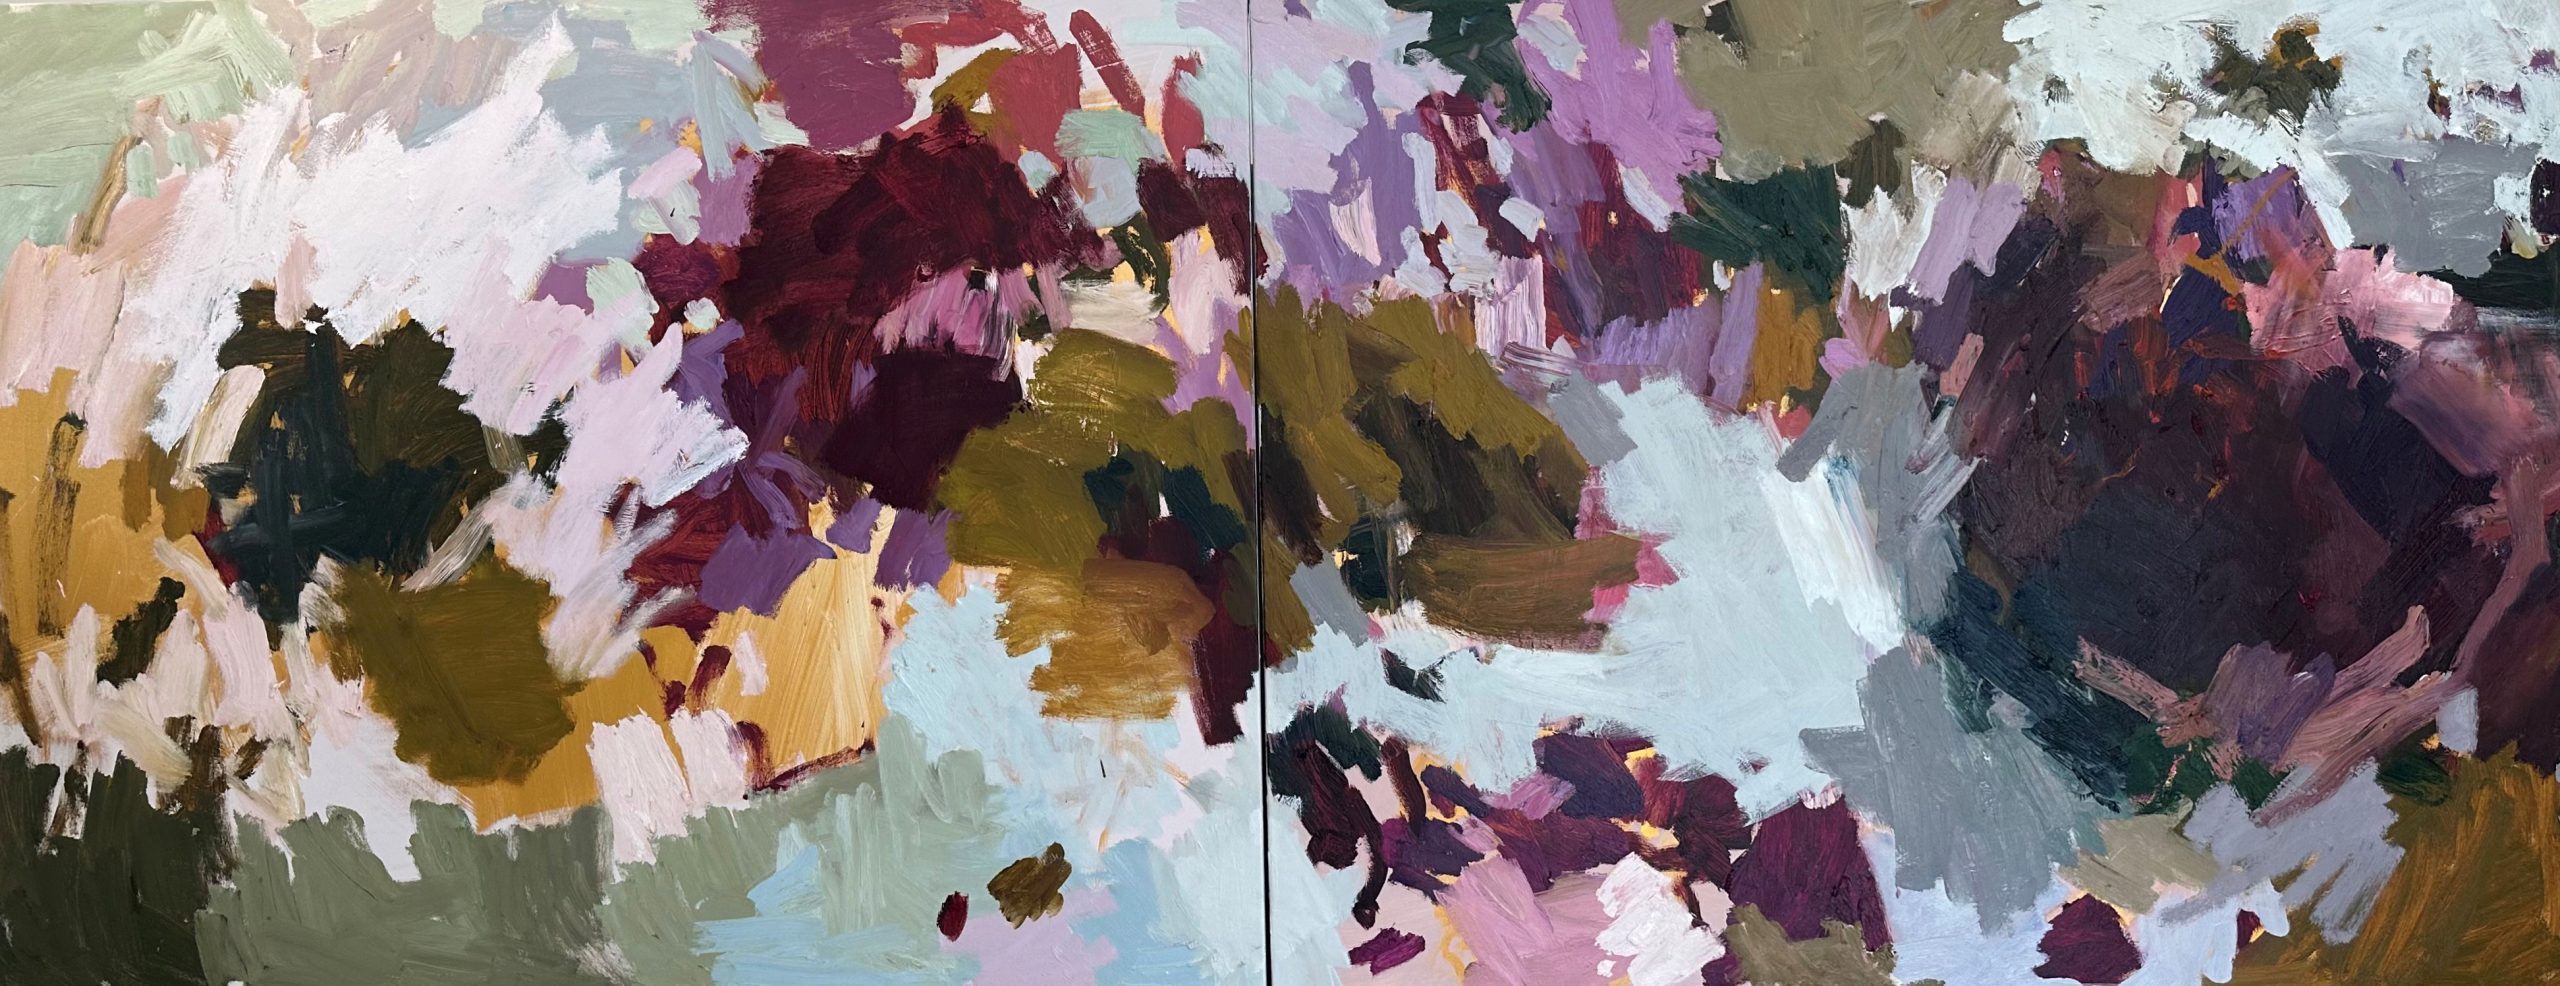 Llewellyn Skye 'We So Boujee' oil on canvas 123 x 304cm $18,500